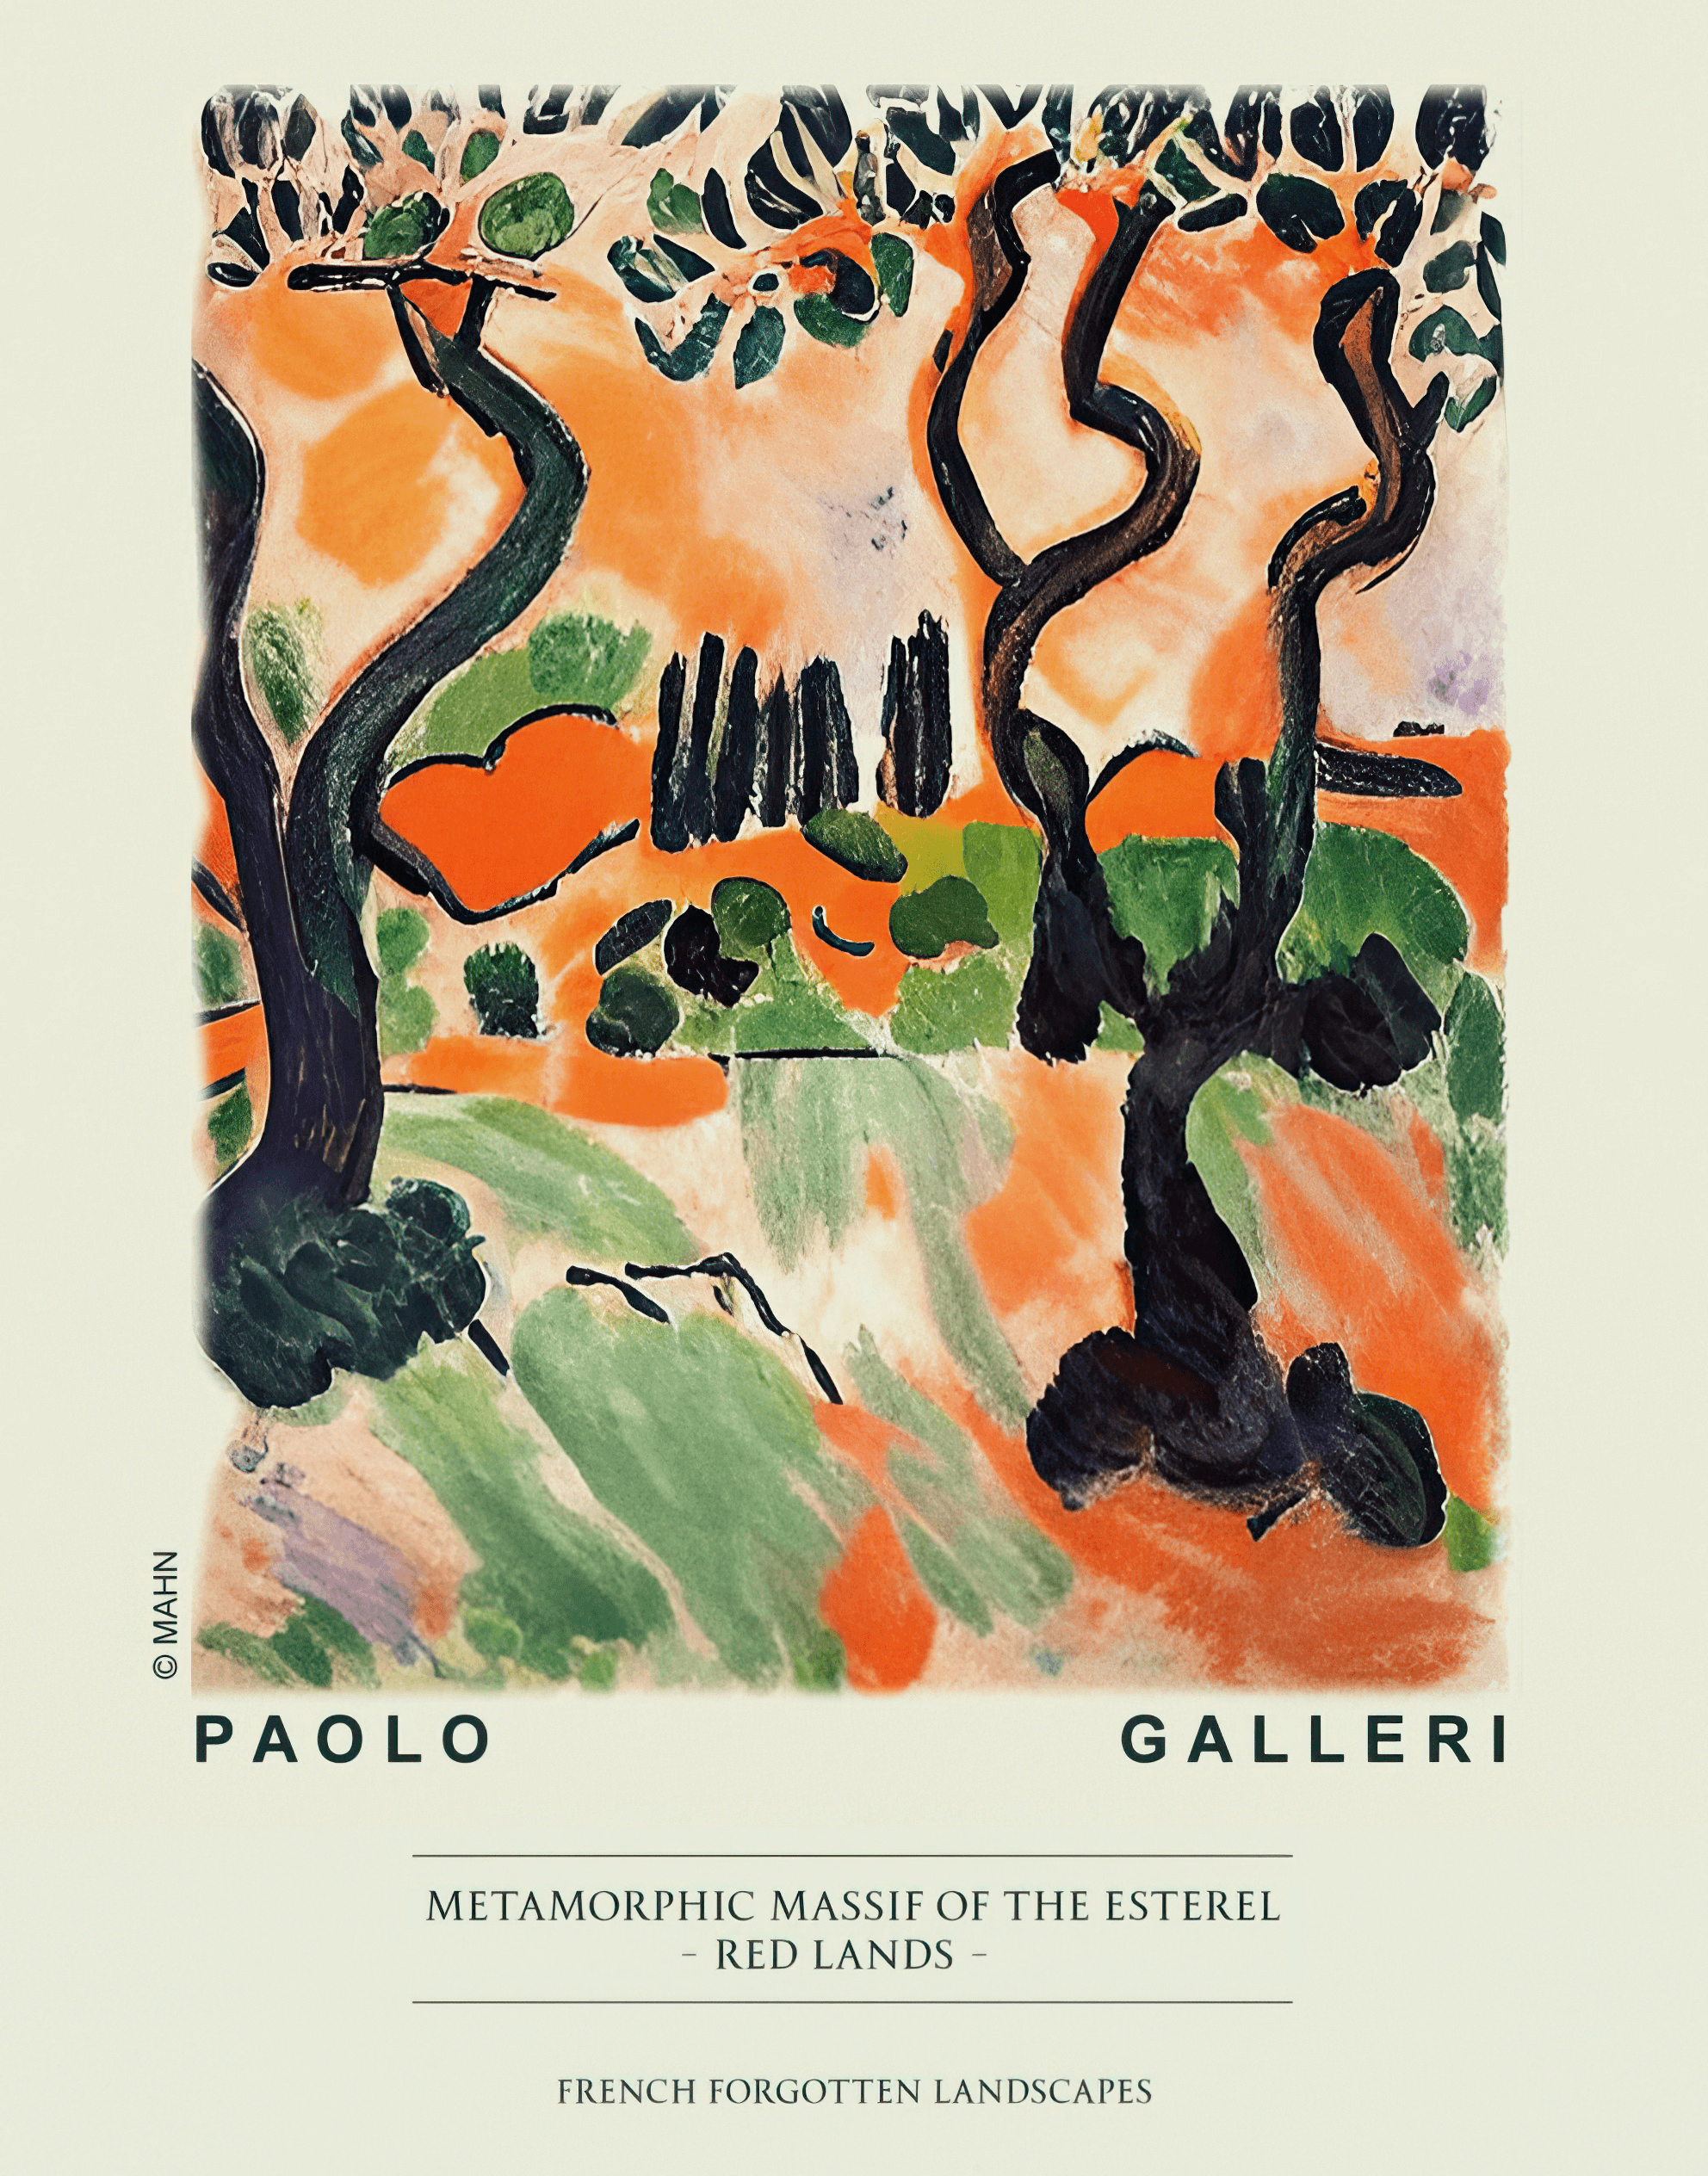 'The Esterel Forest #2' |Paolo Galleri|